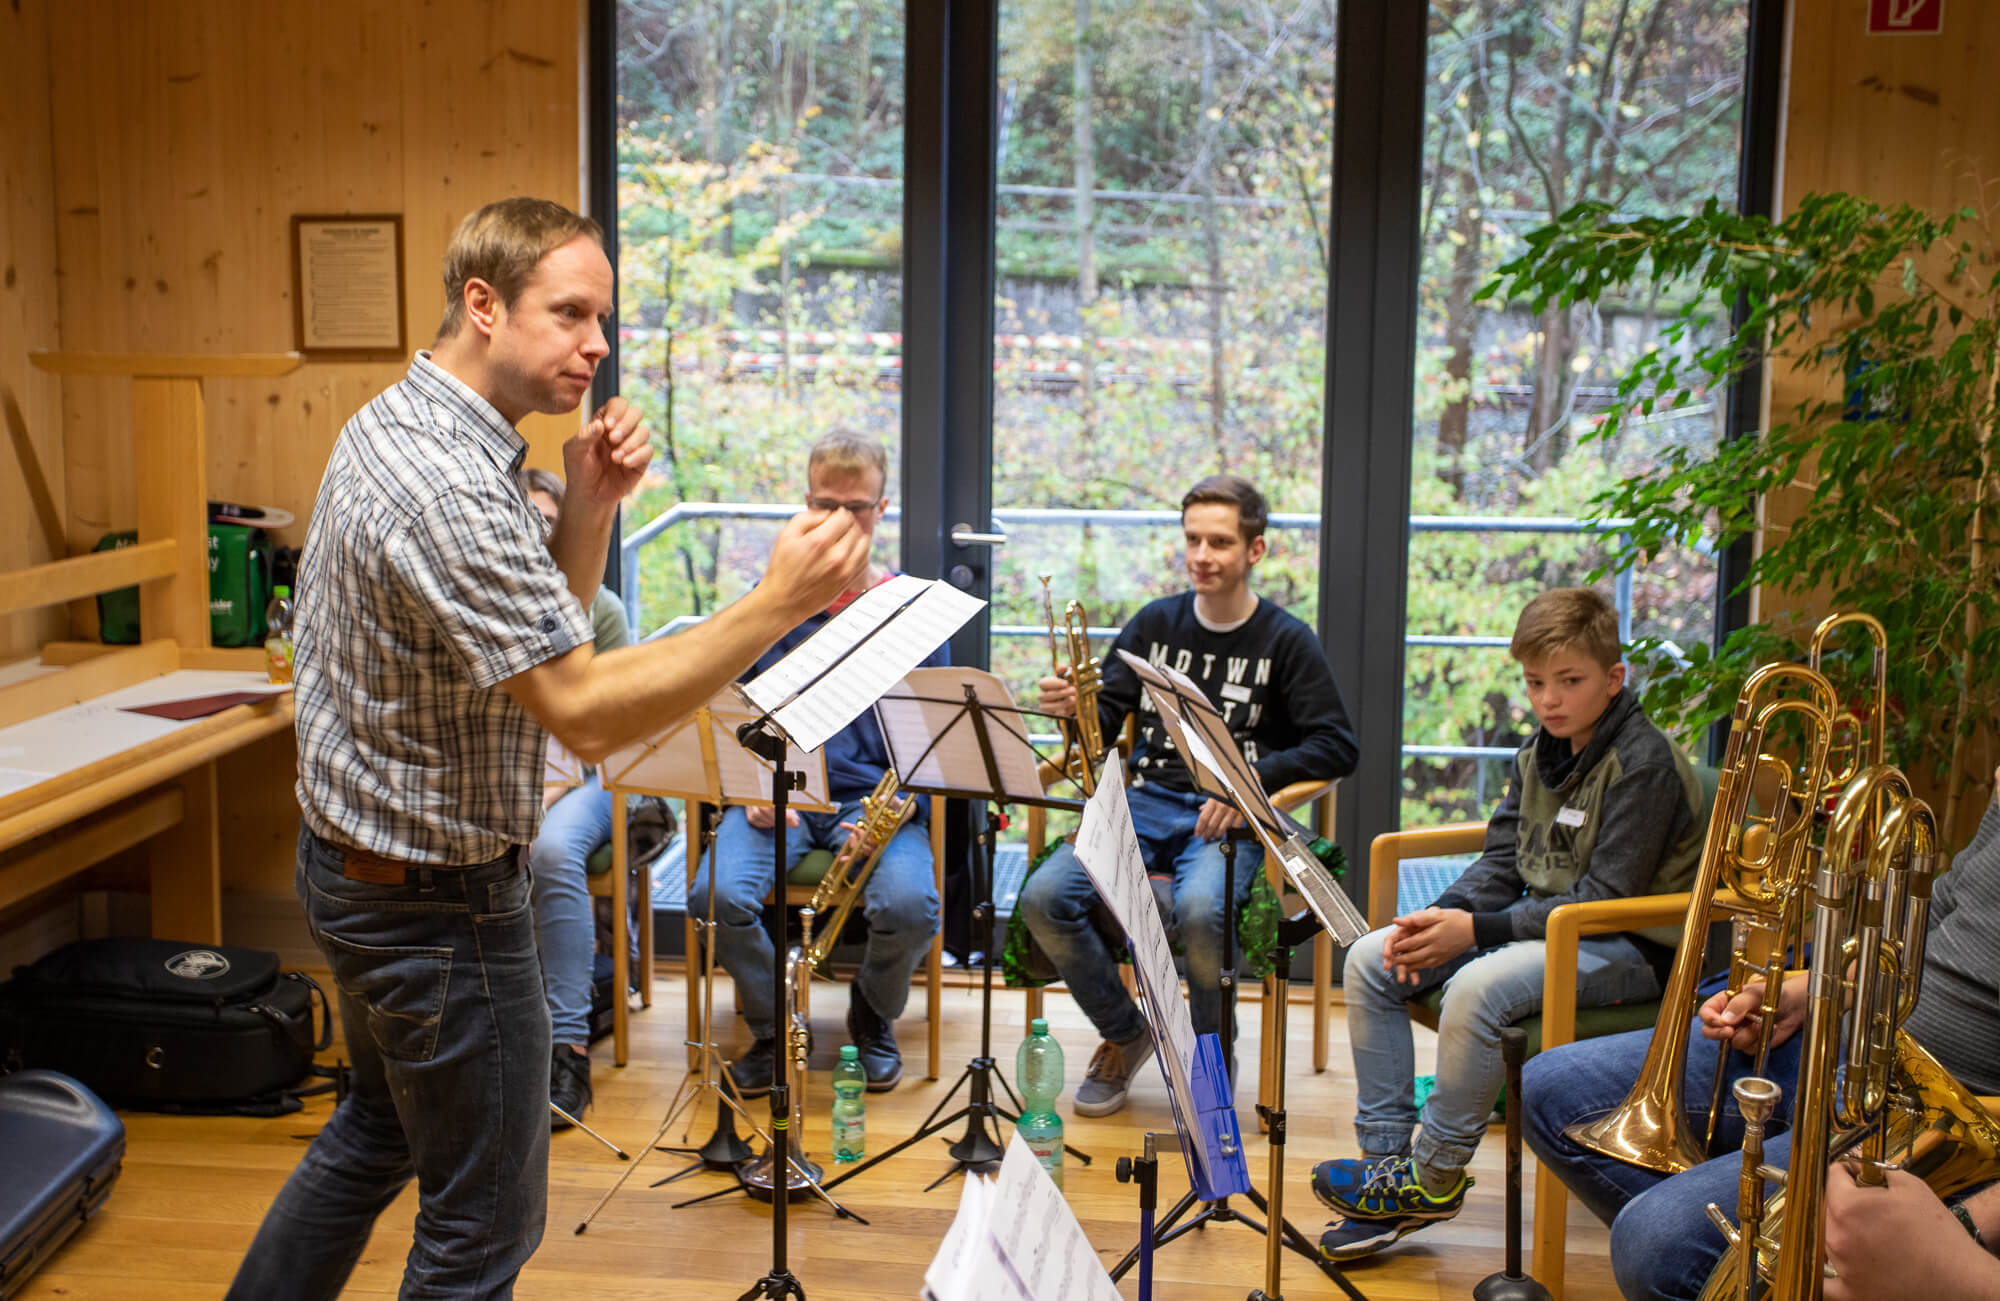 Muckst Du Musiker-Workshop Olsberg Musikschule PK-Media